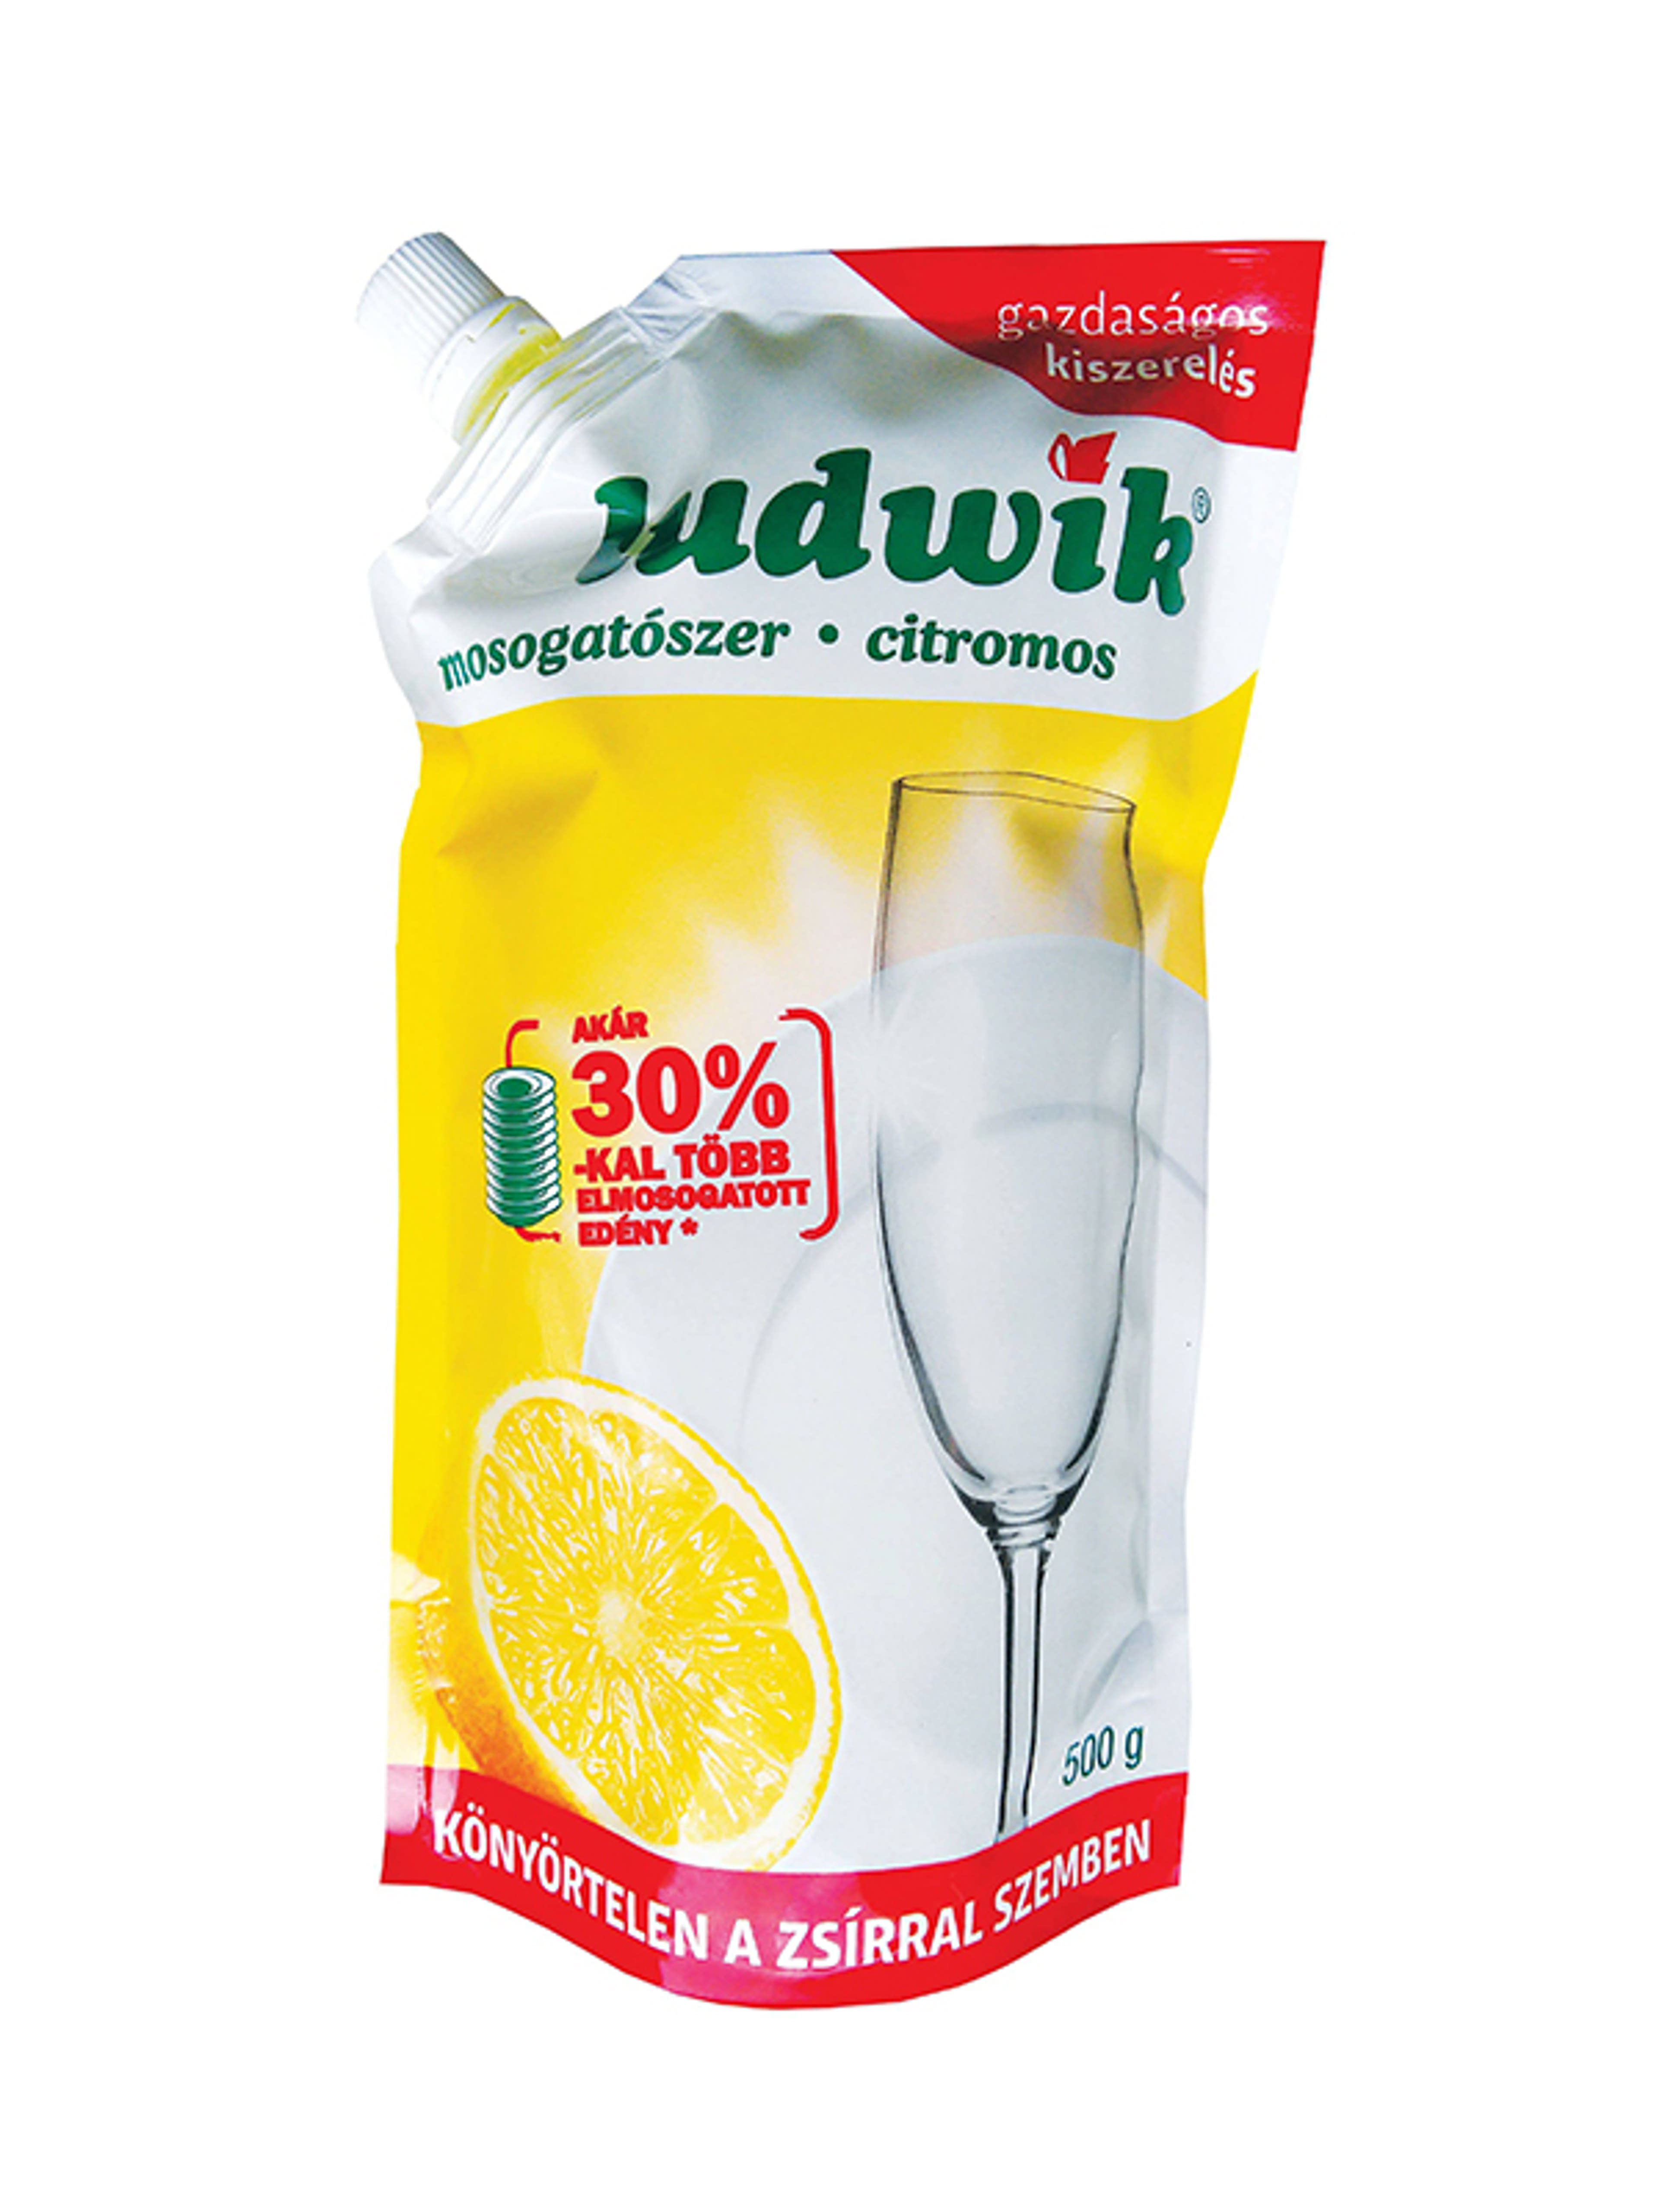 Ludwik mosogatószer citrom - 500 g-1